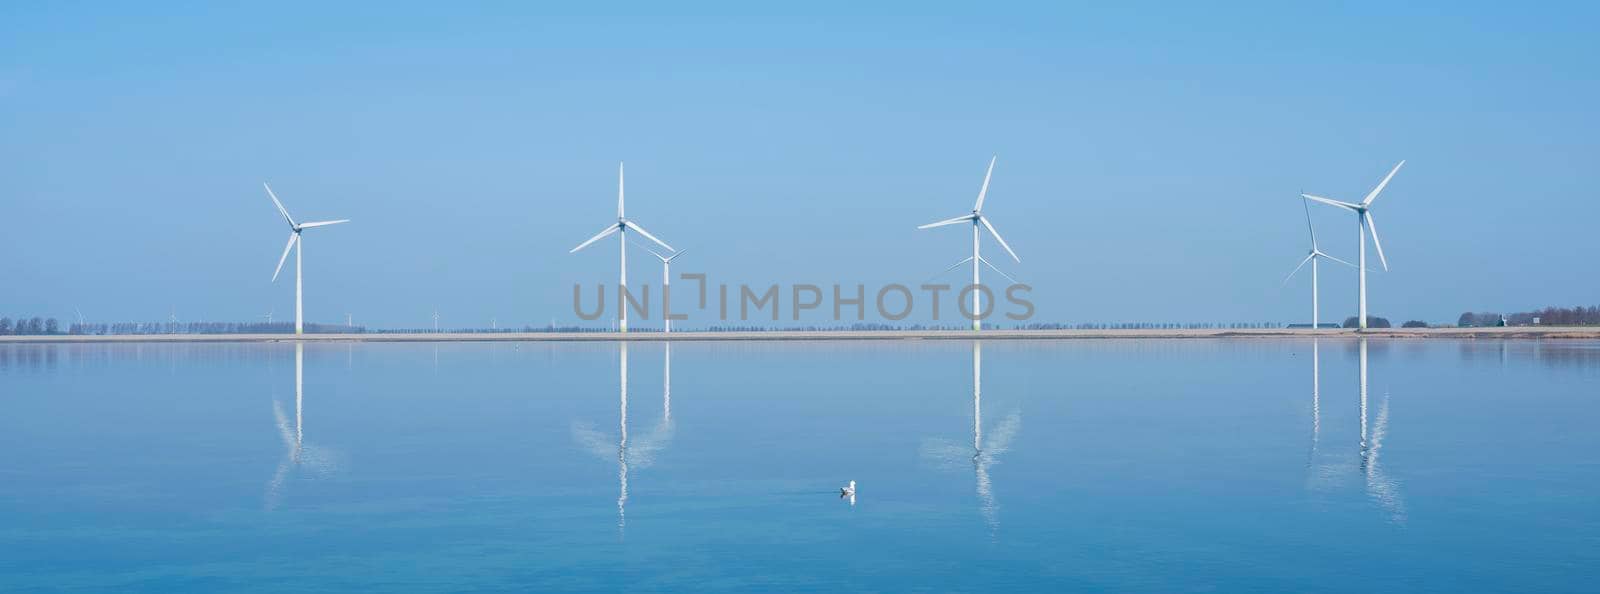 wind turbines reflected in water near philipsdam in dutch province of zeeland by ahavelaar